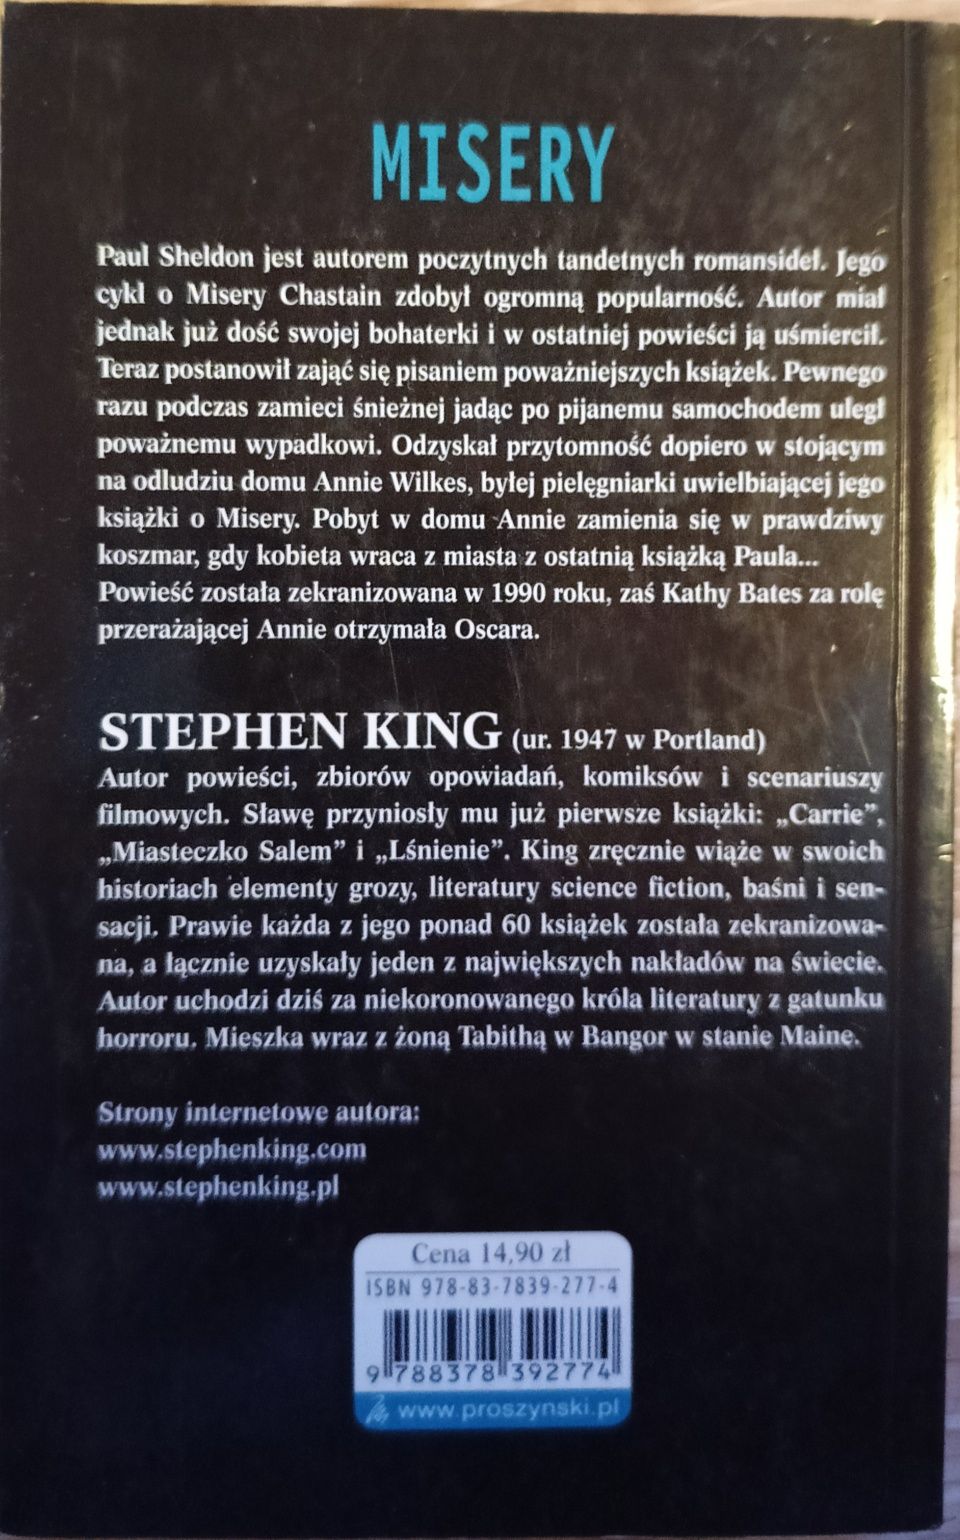 Misery " Stephen King